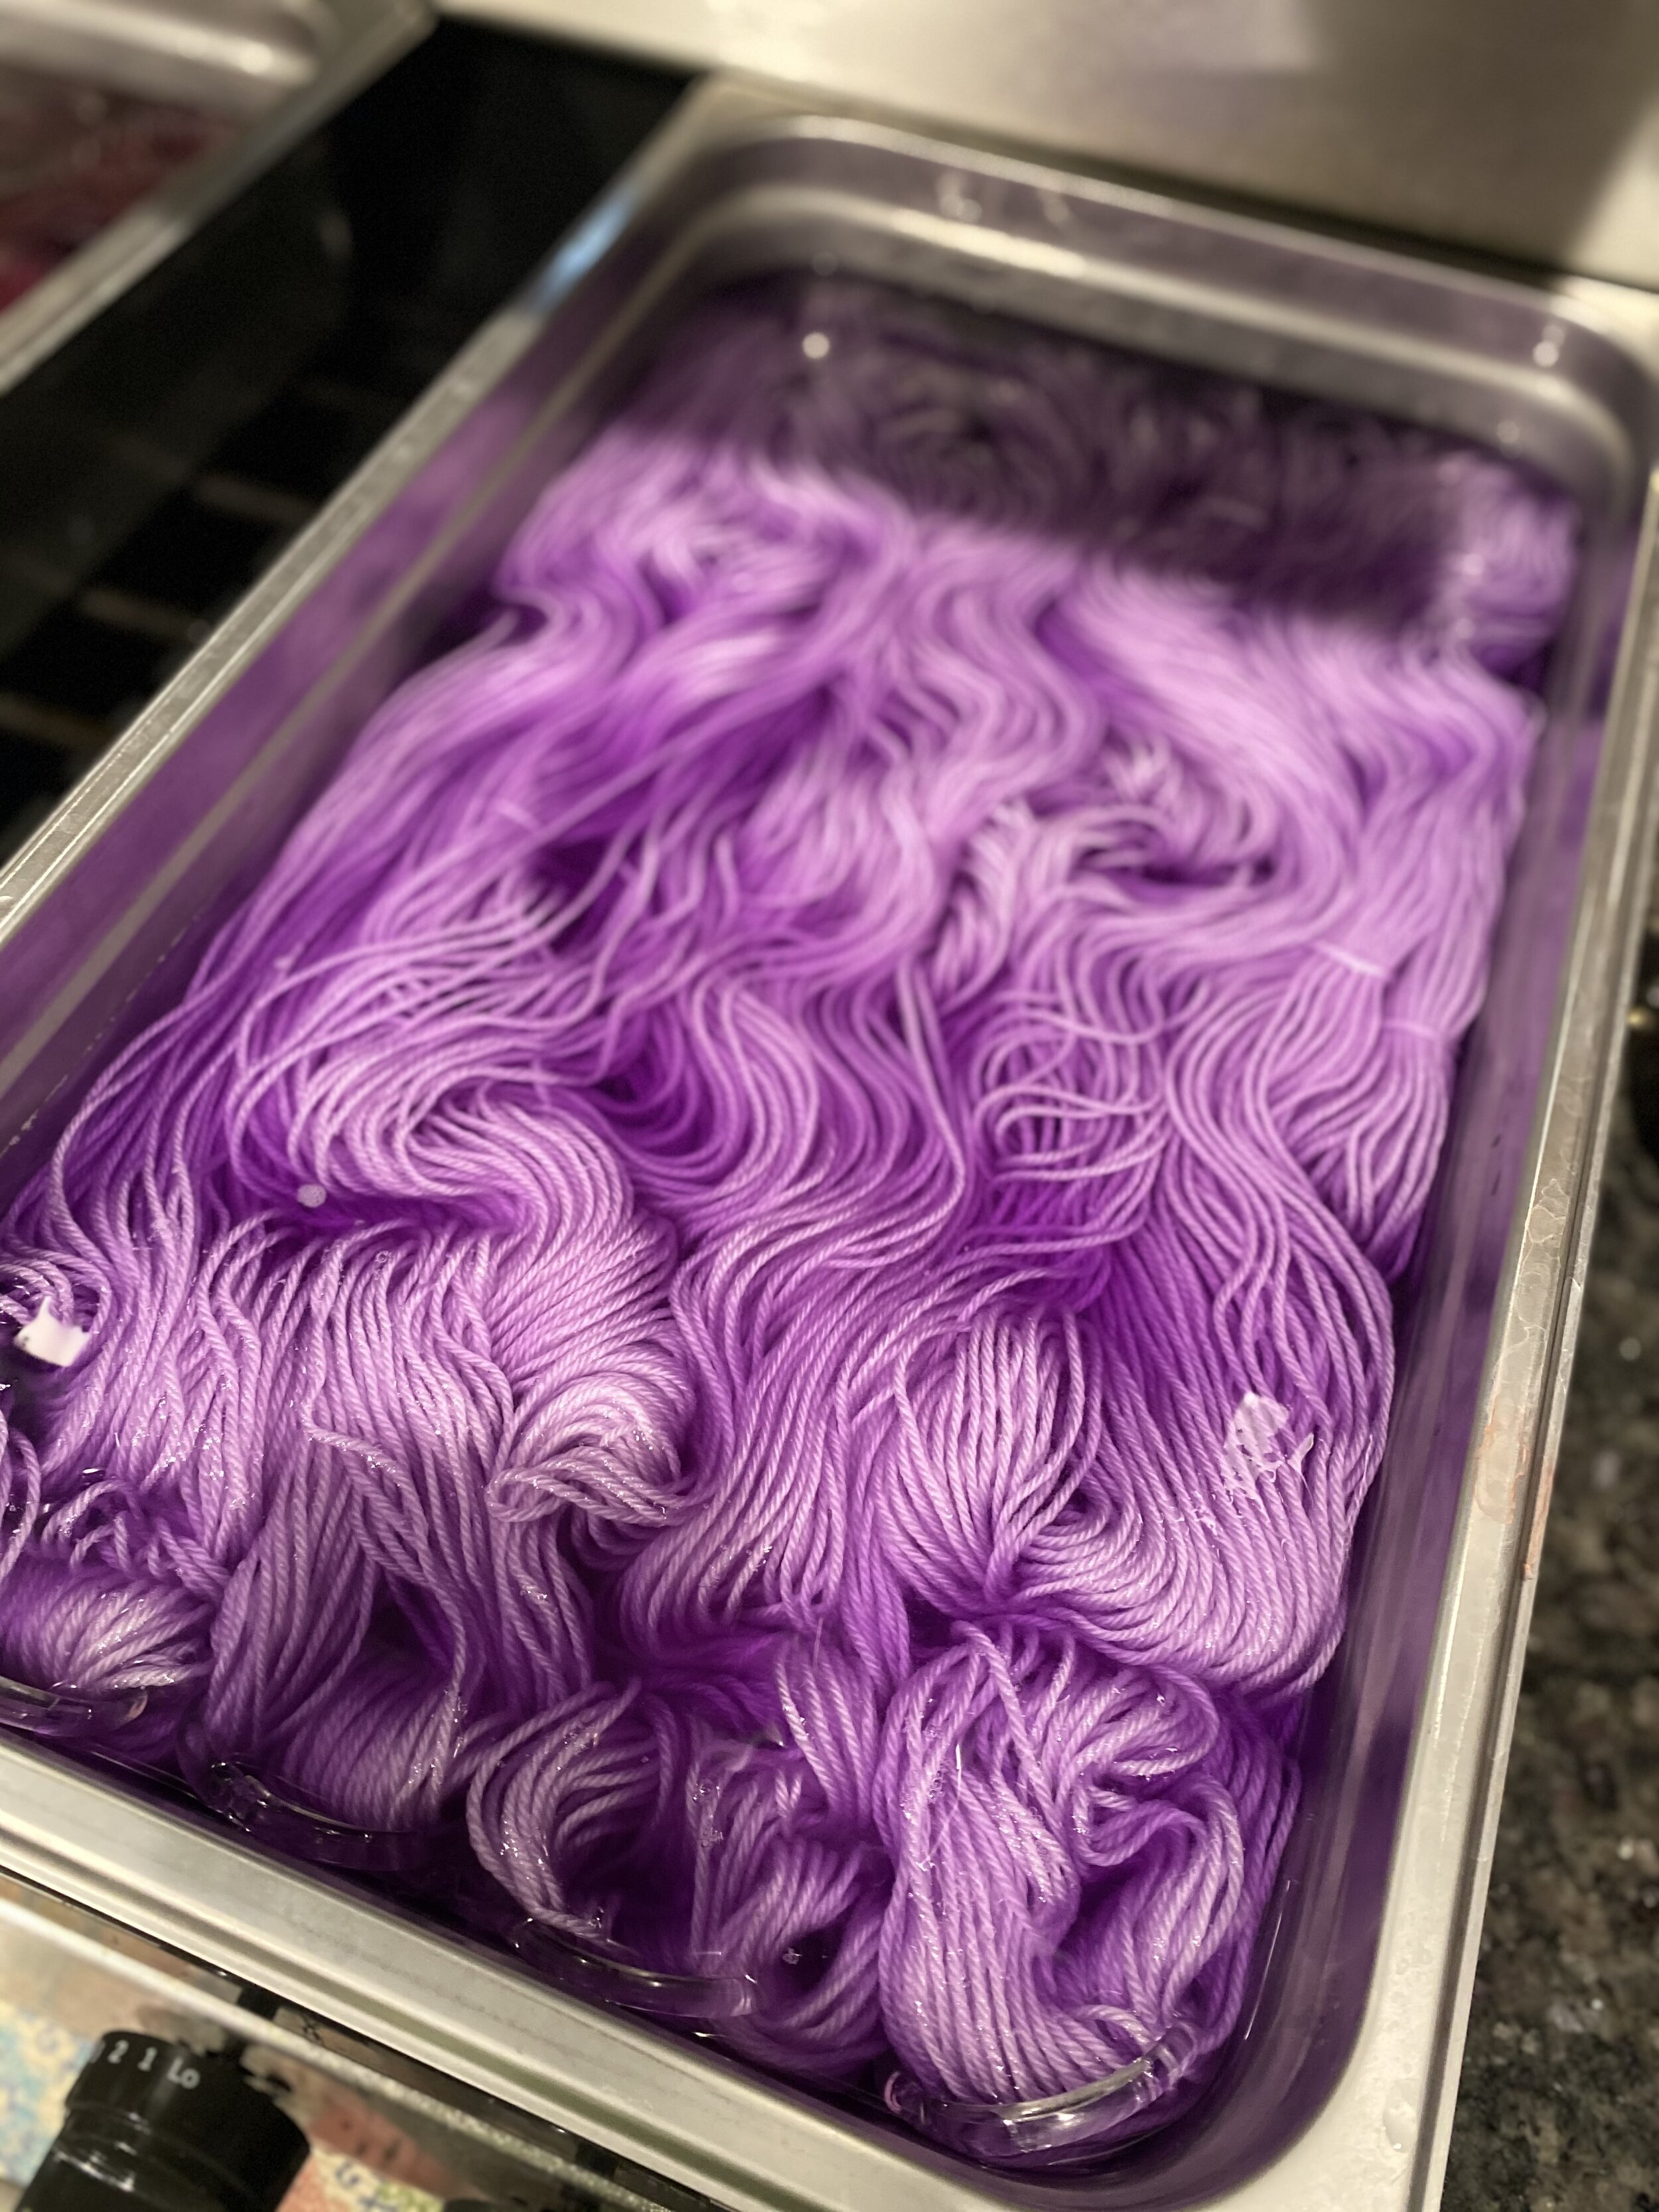 A metal pan full of yarn soaking in pink dye.